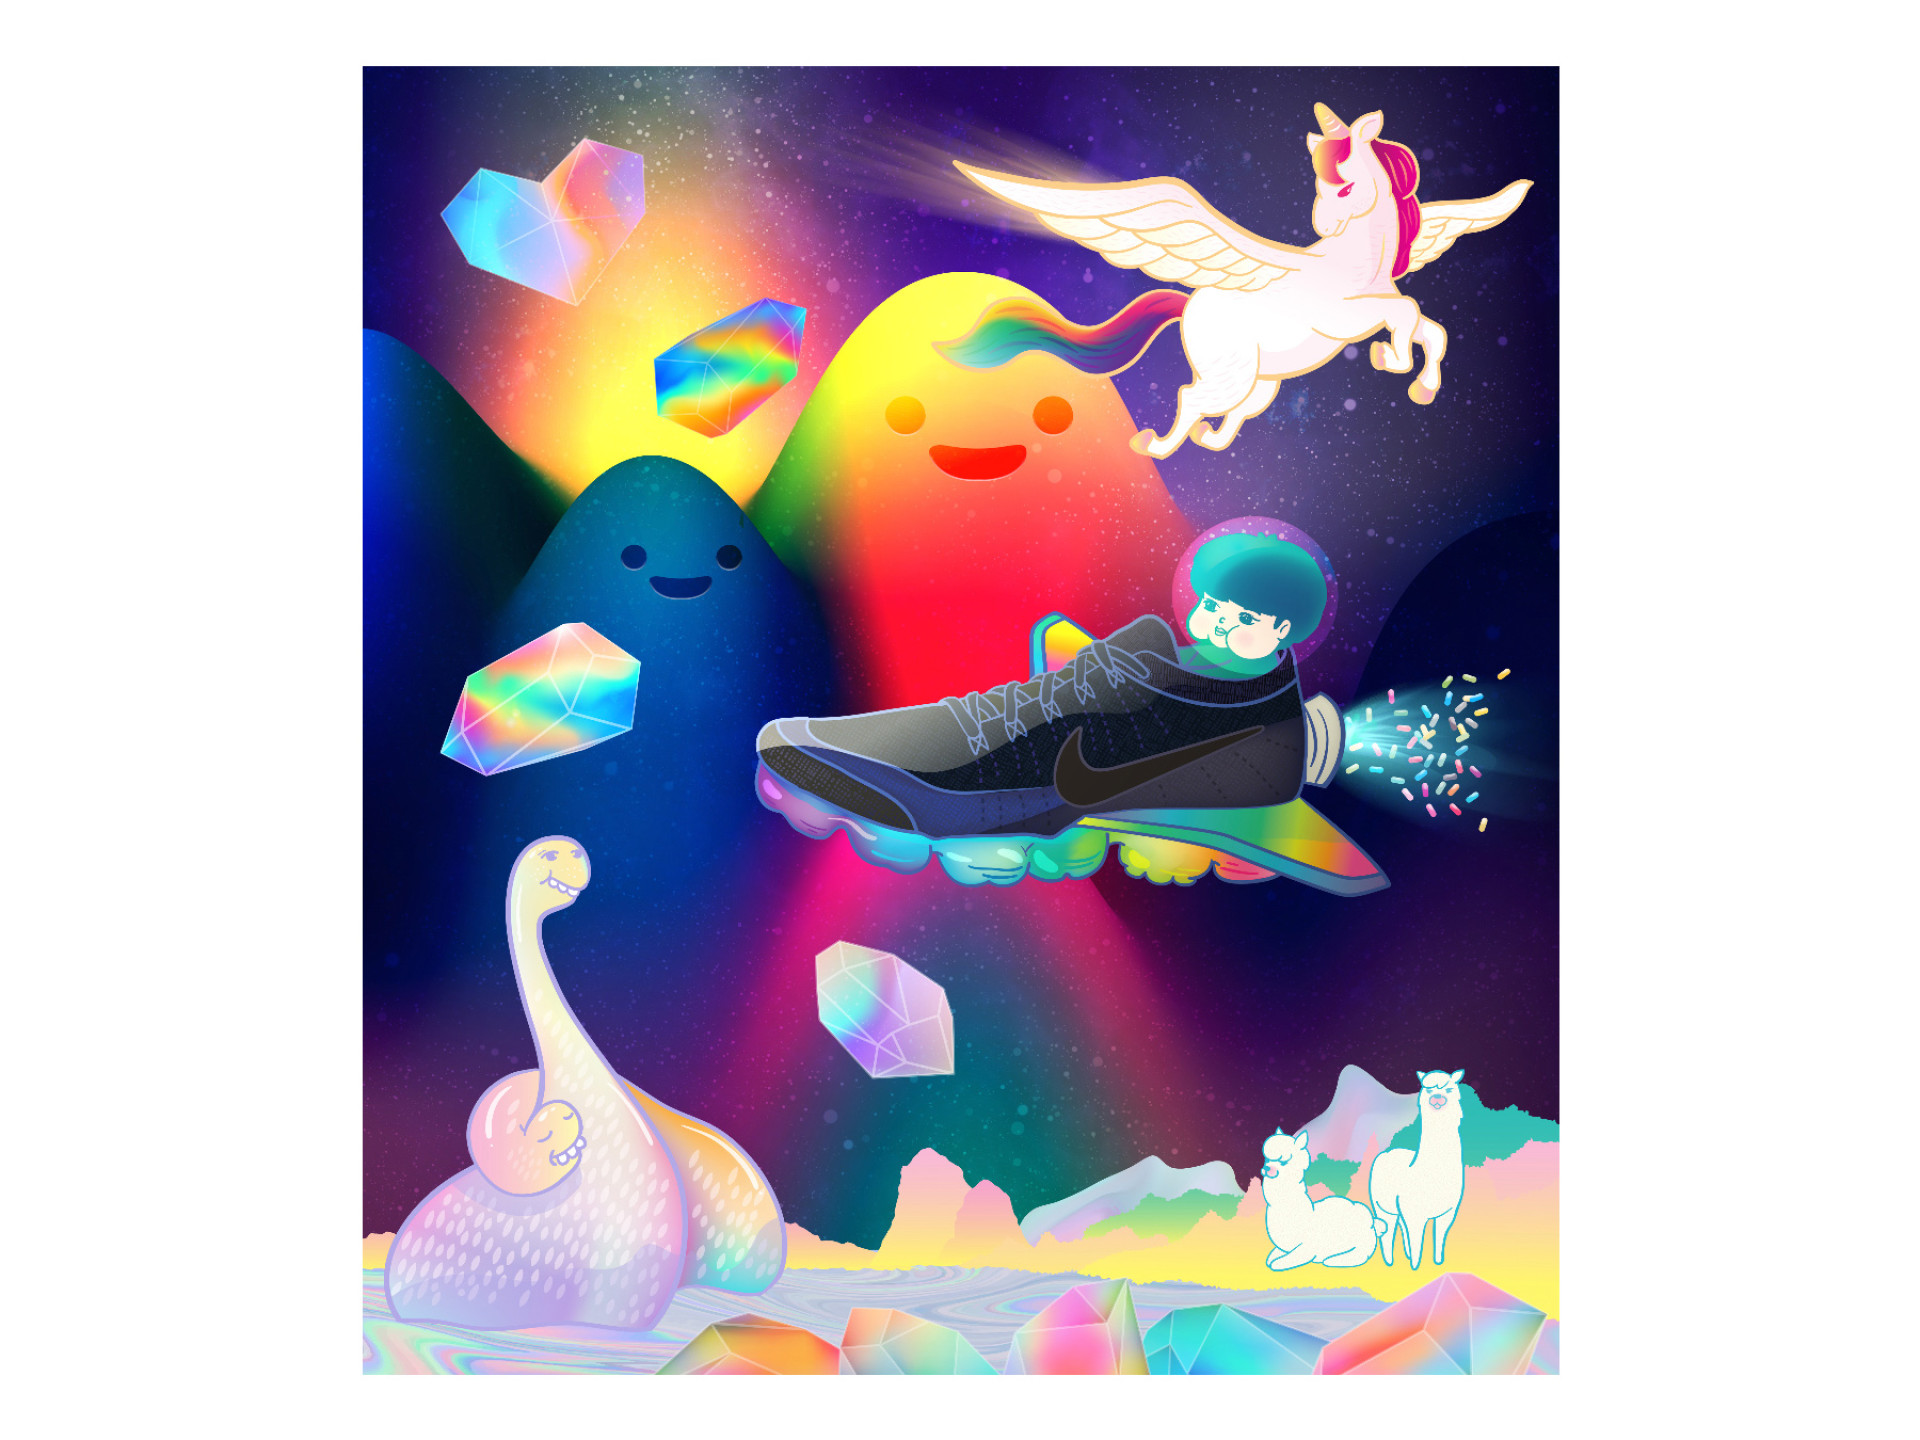 Hong Kong Nike Lab illustration by Crystal Jane Wong